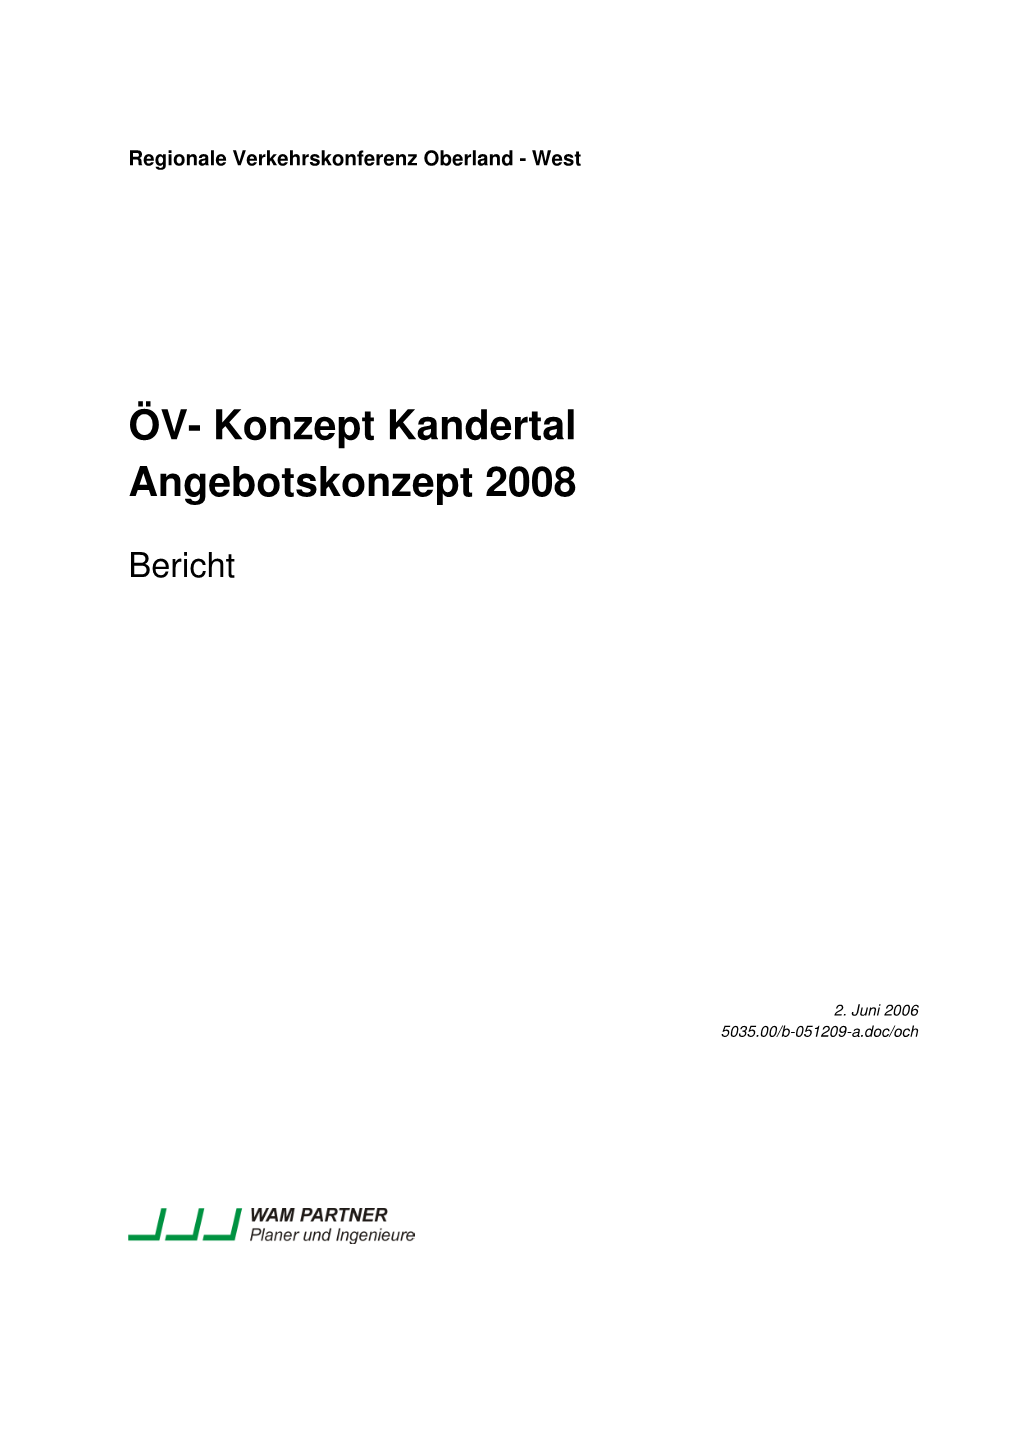 Regionales Angebotskonzept 2008 RVK-OW Kandertal